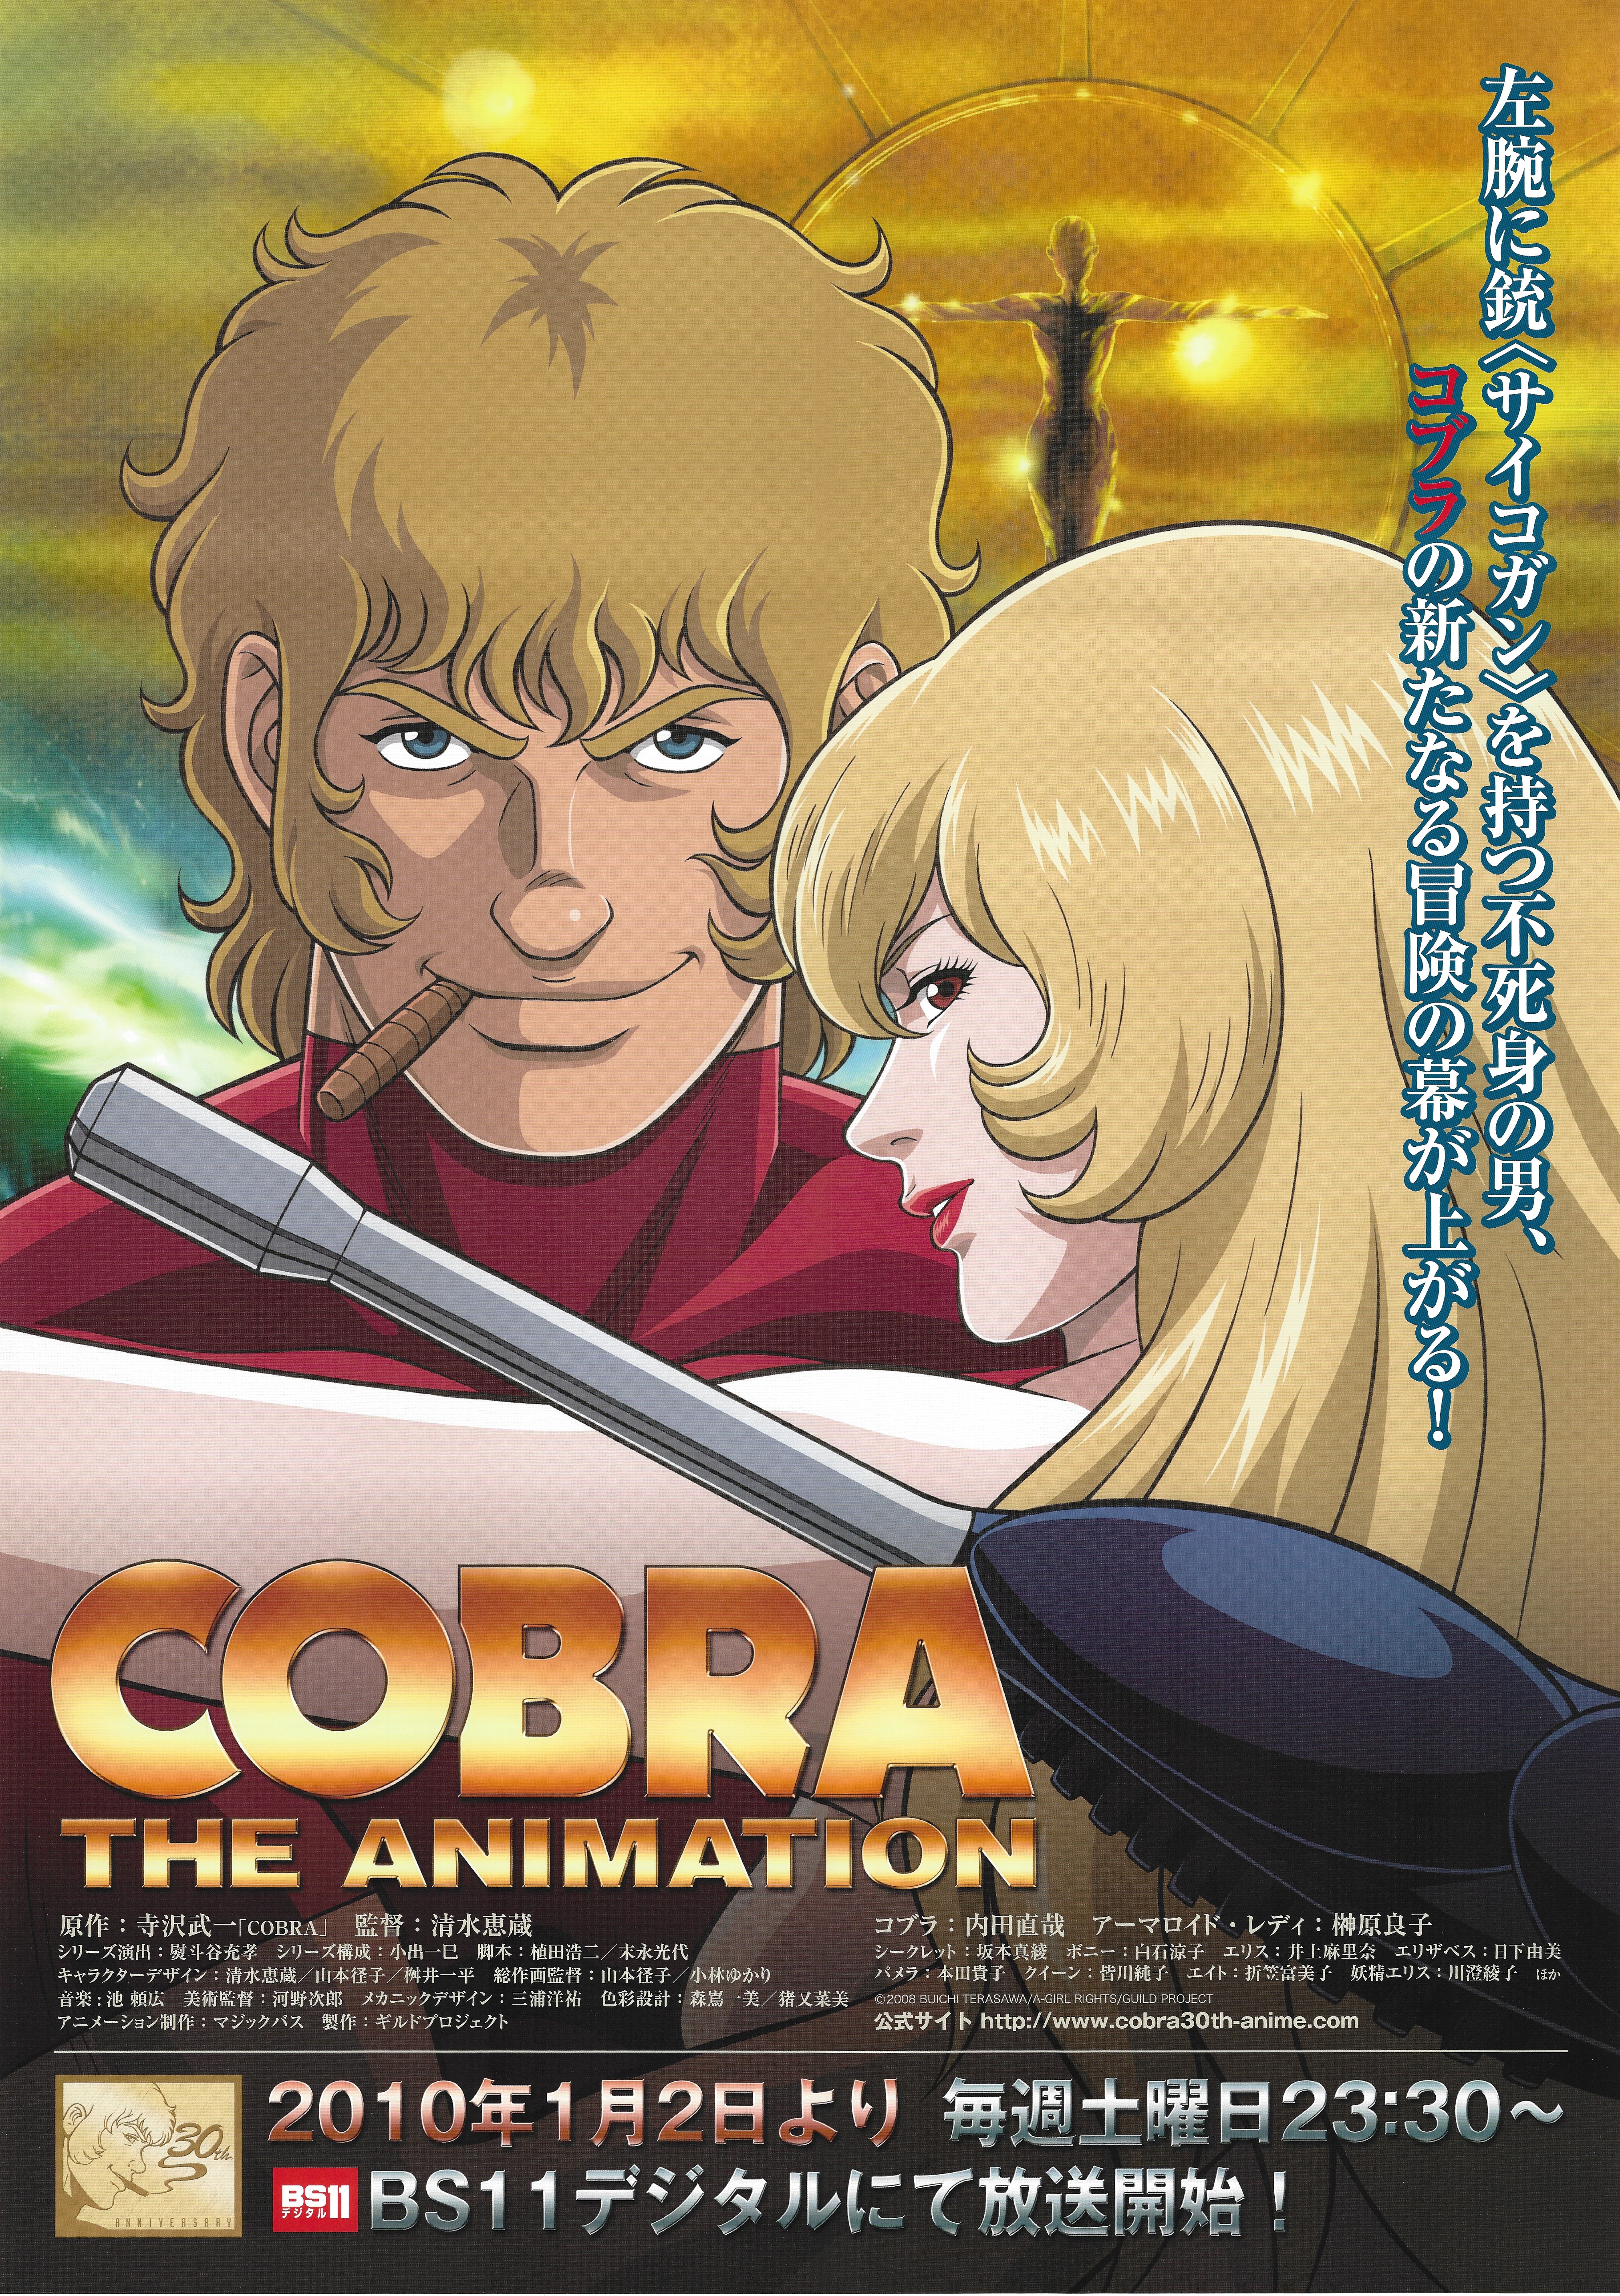 Ban Declared For The Animation B2 Cobra Poster Mandarake Online Shop